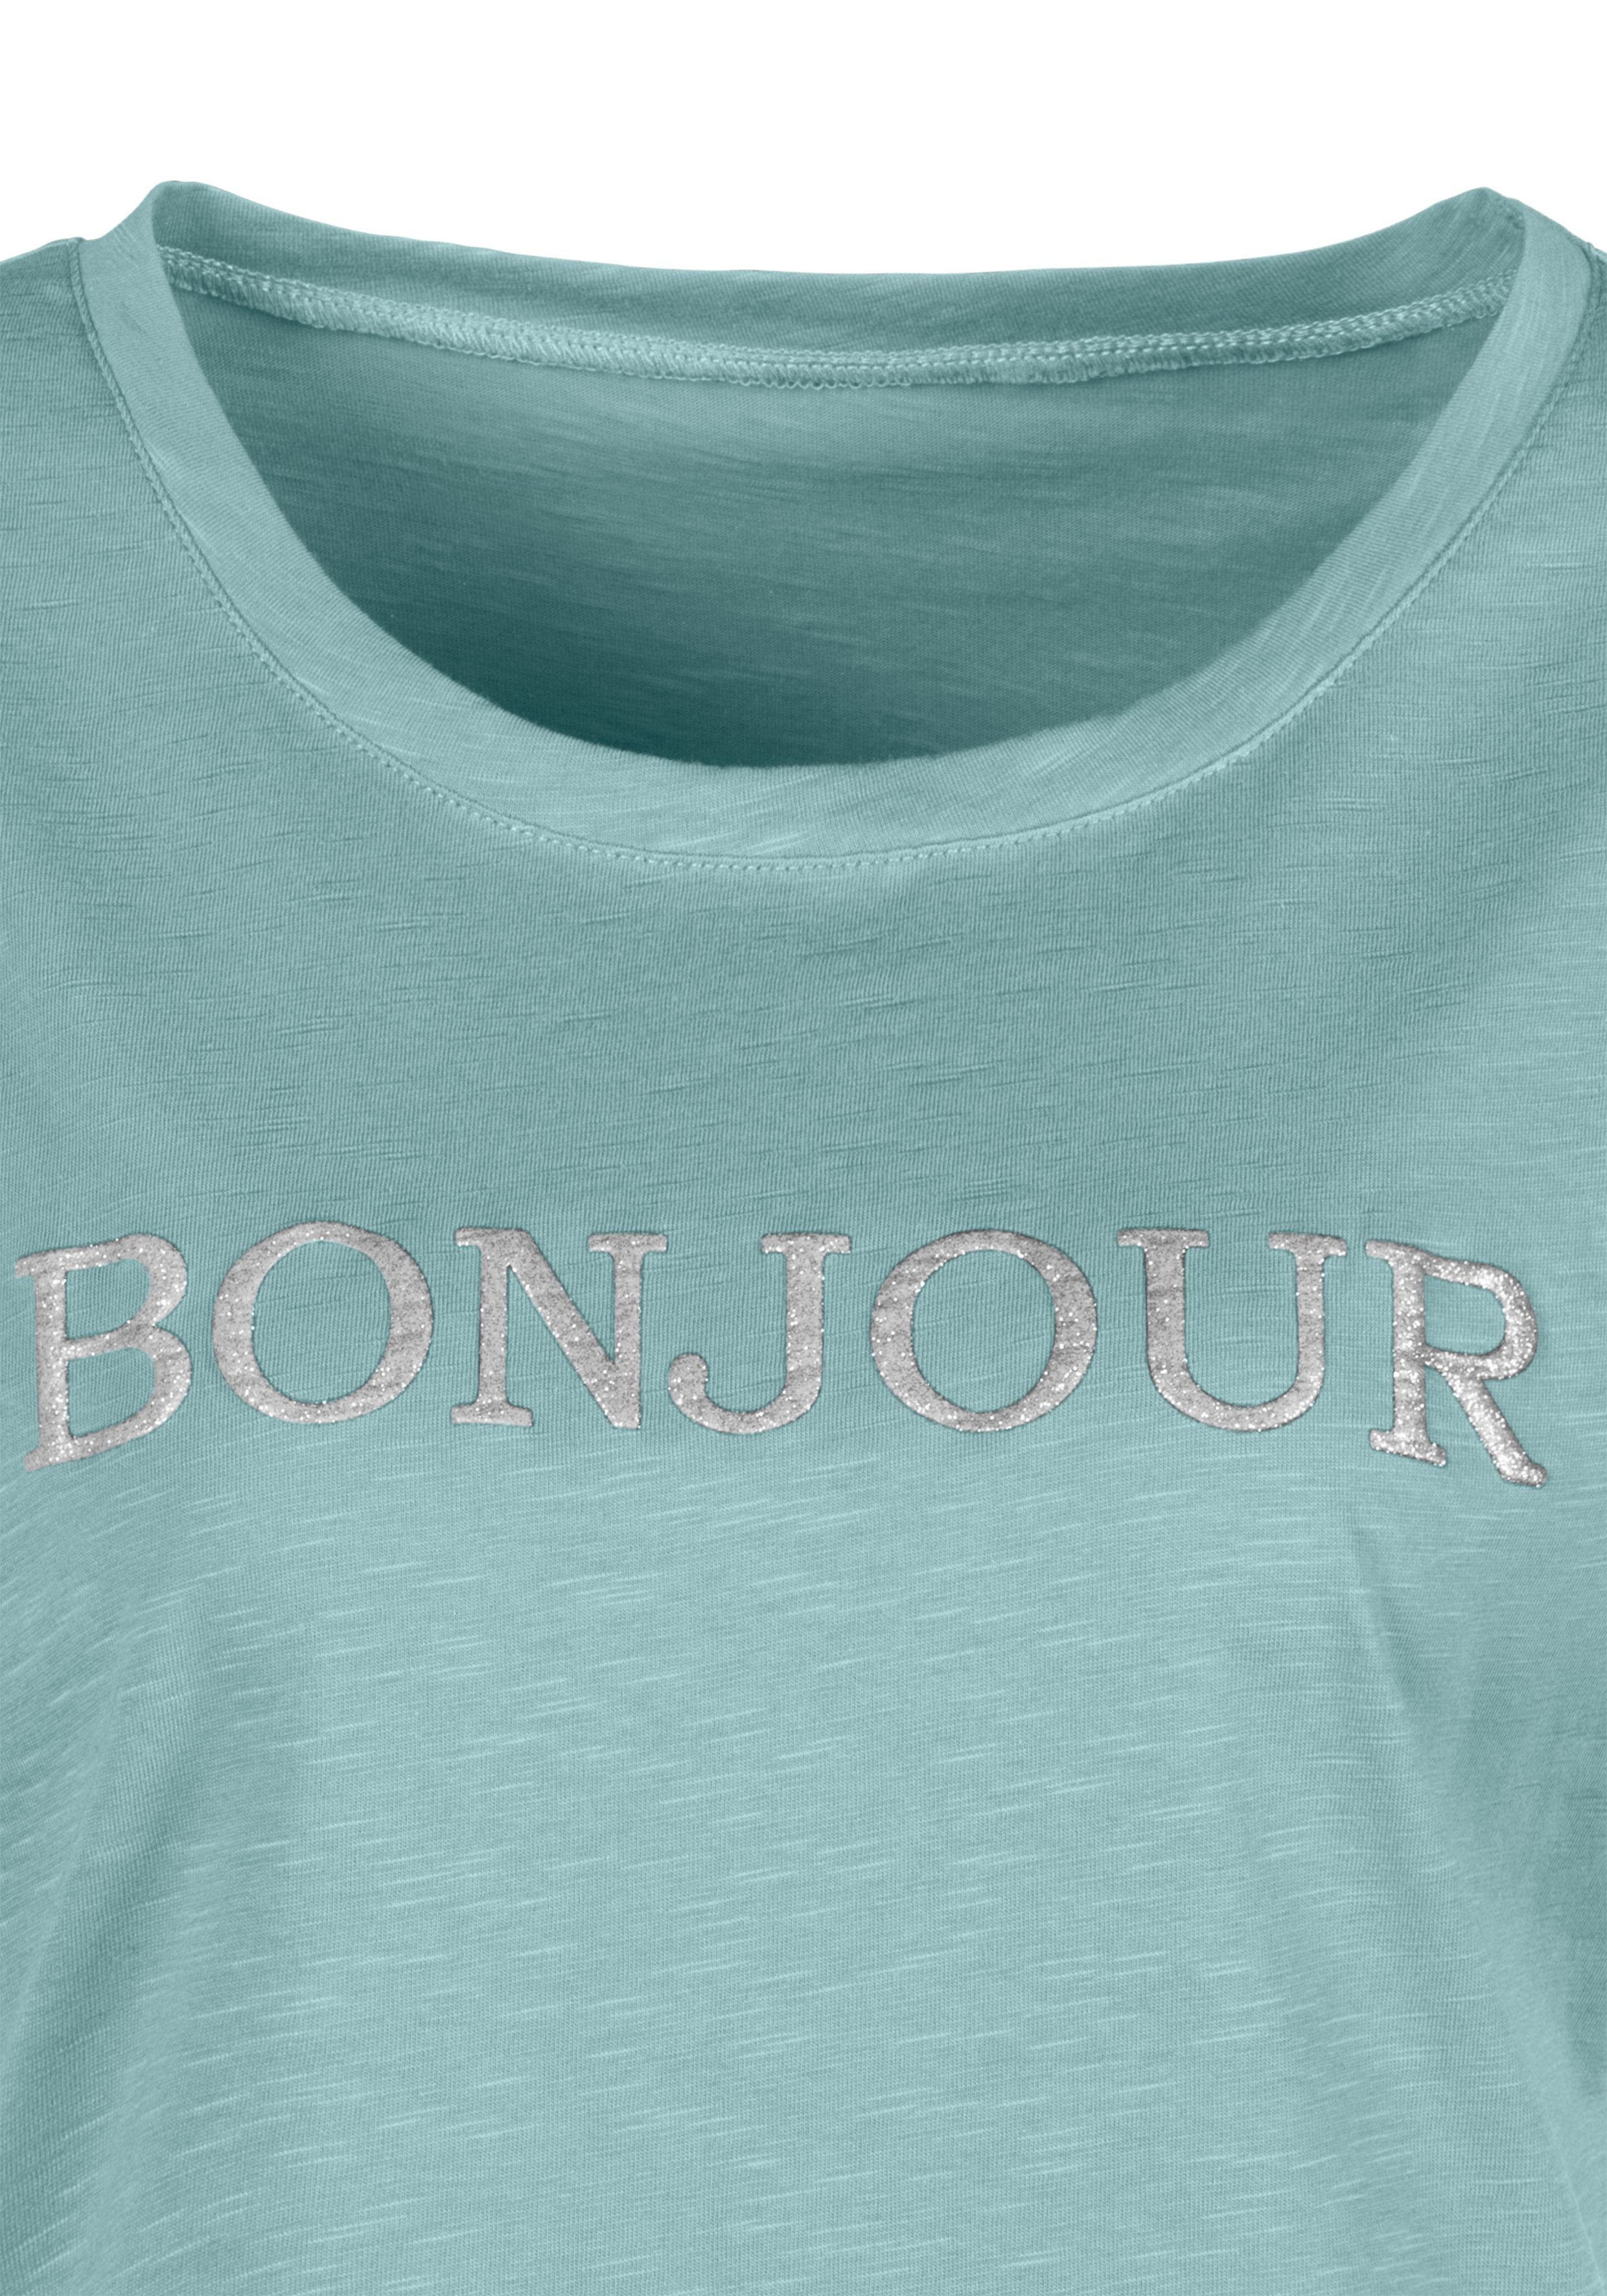 T-Shirt mit "Bonjour" mint modischem Frontdruck Vivance